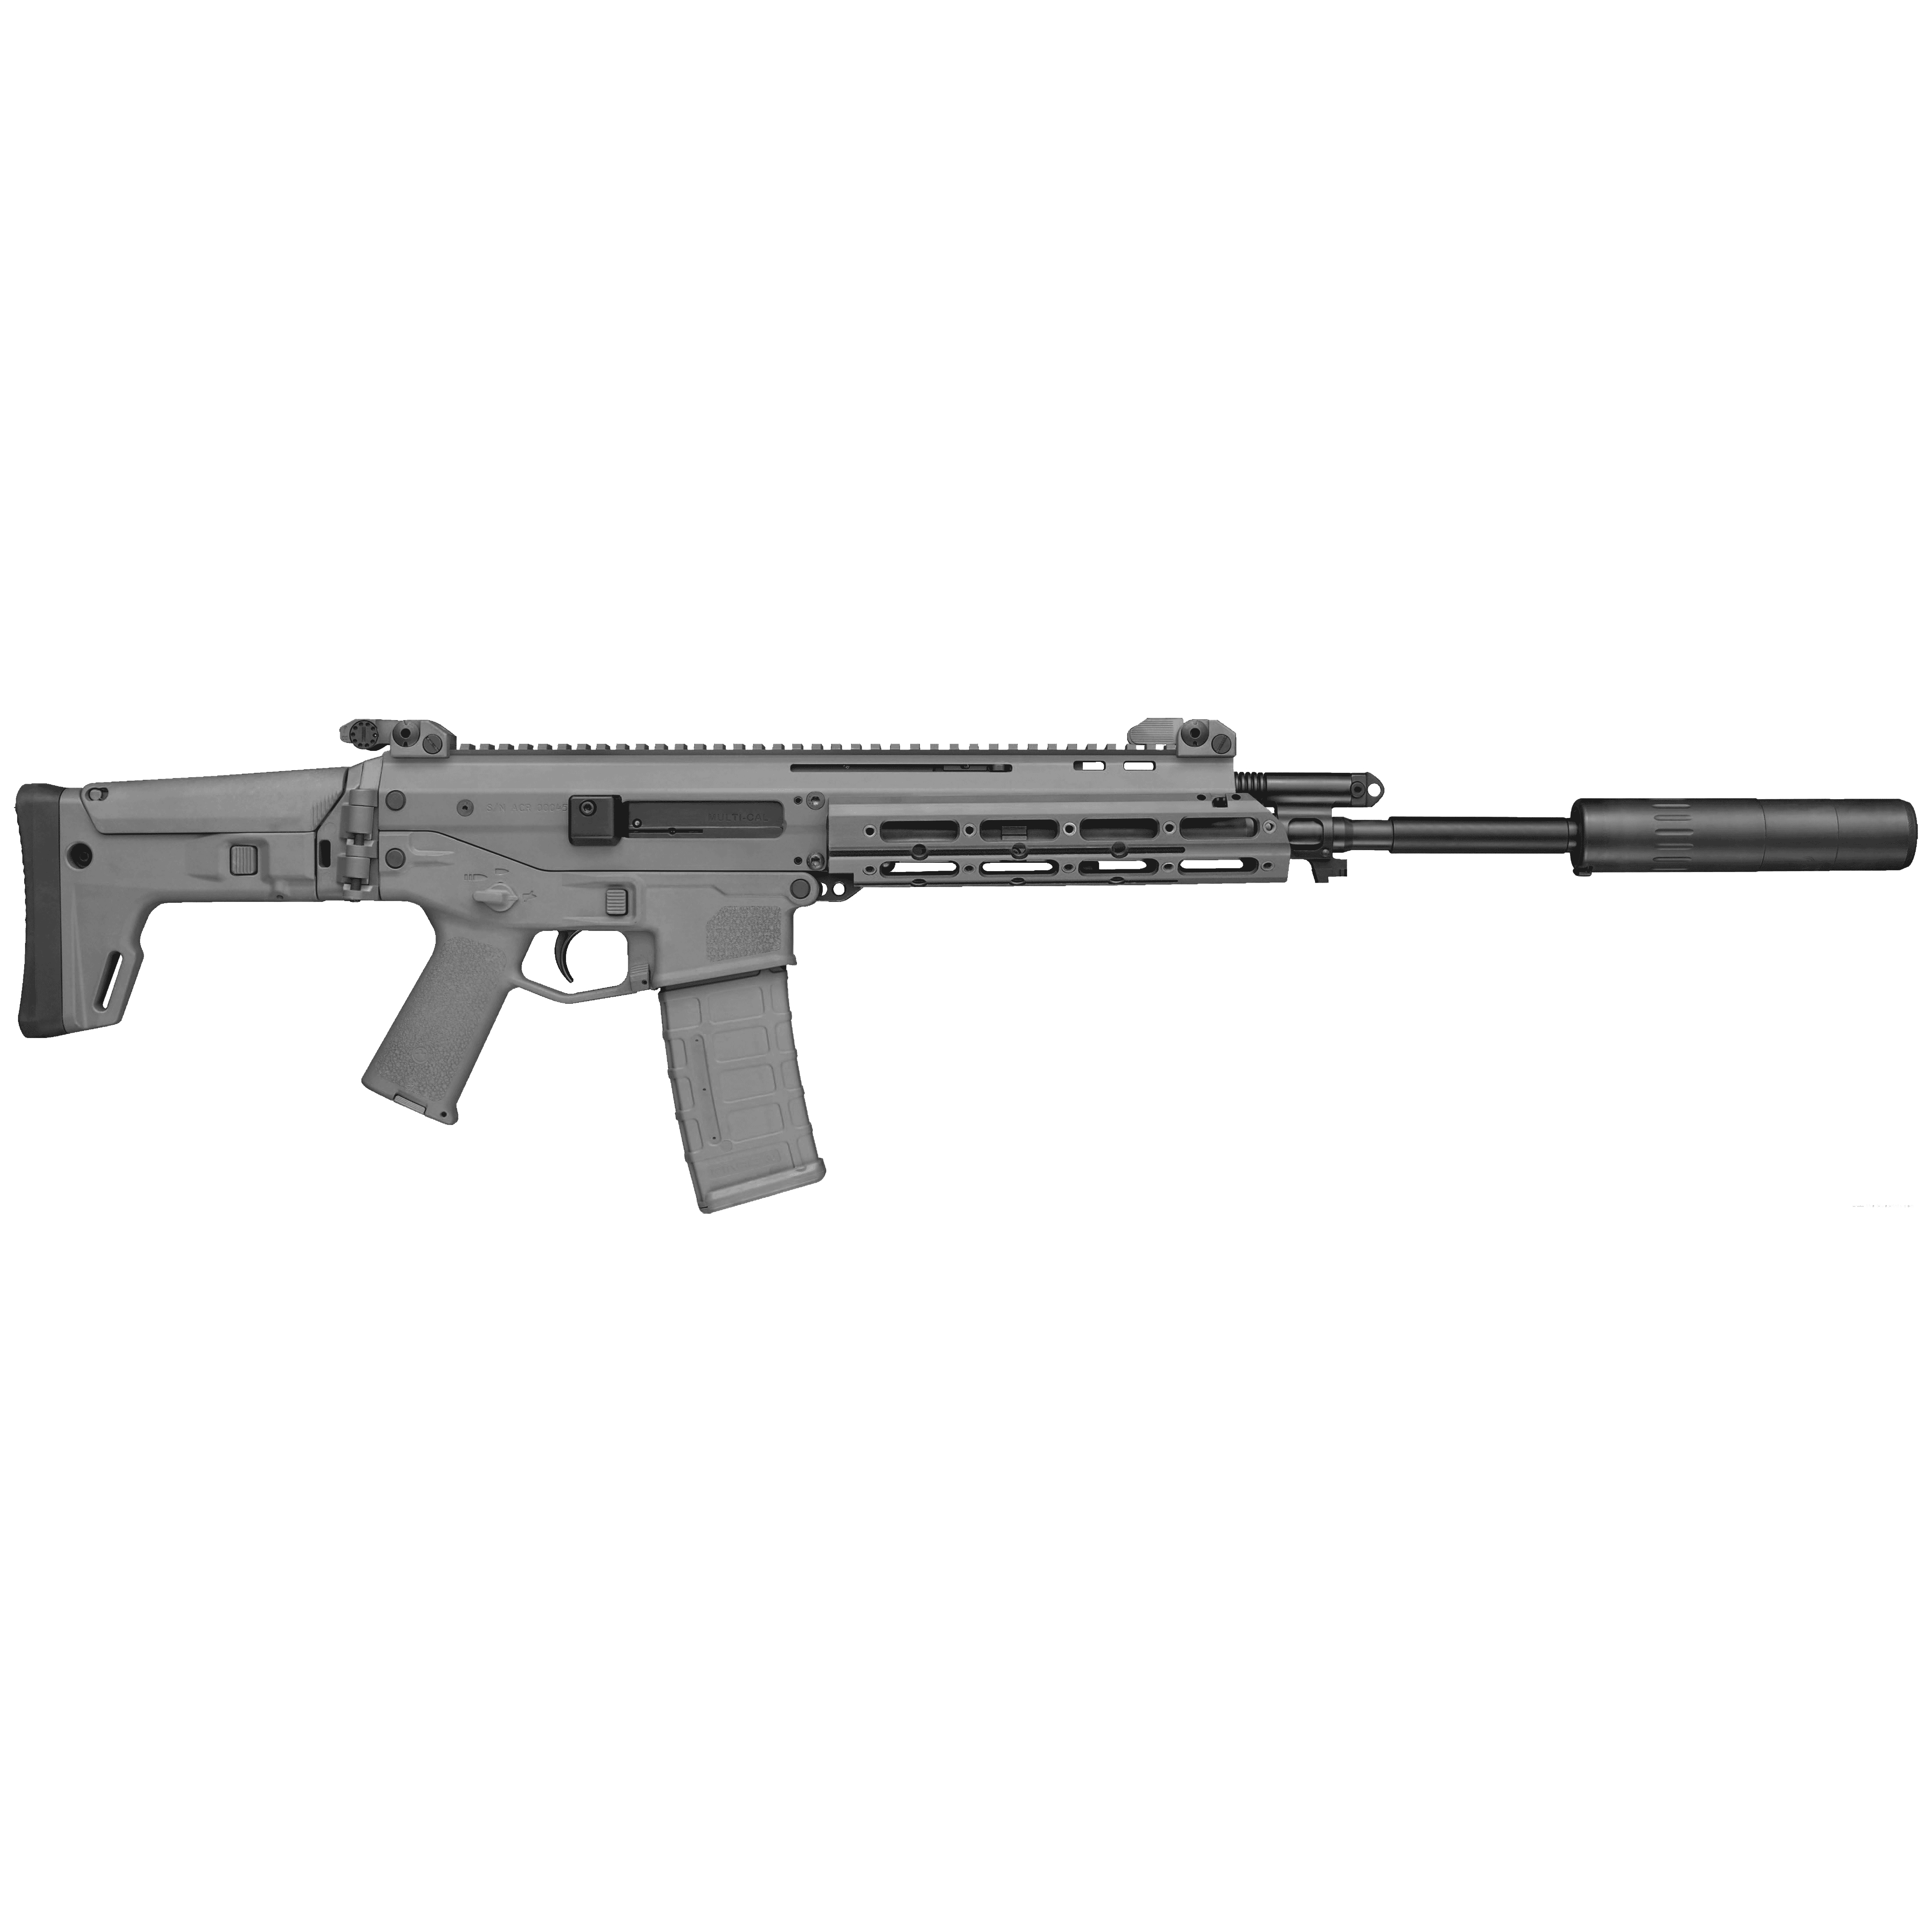 Assault Rifle Transparent Image